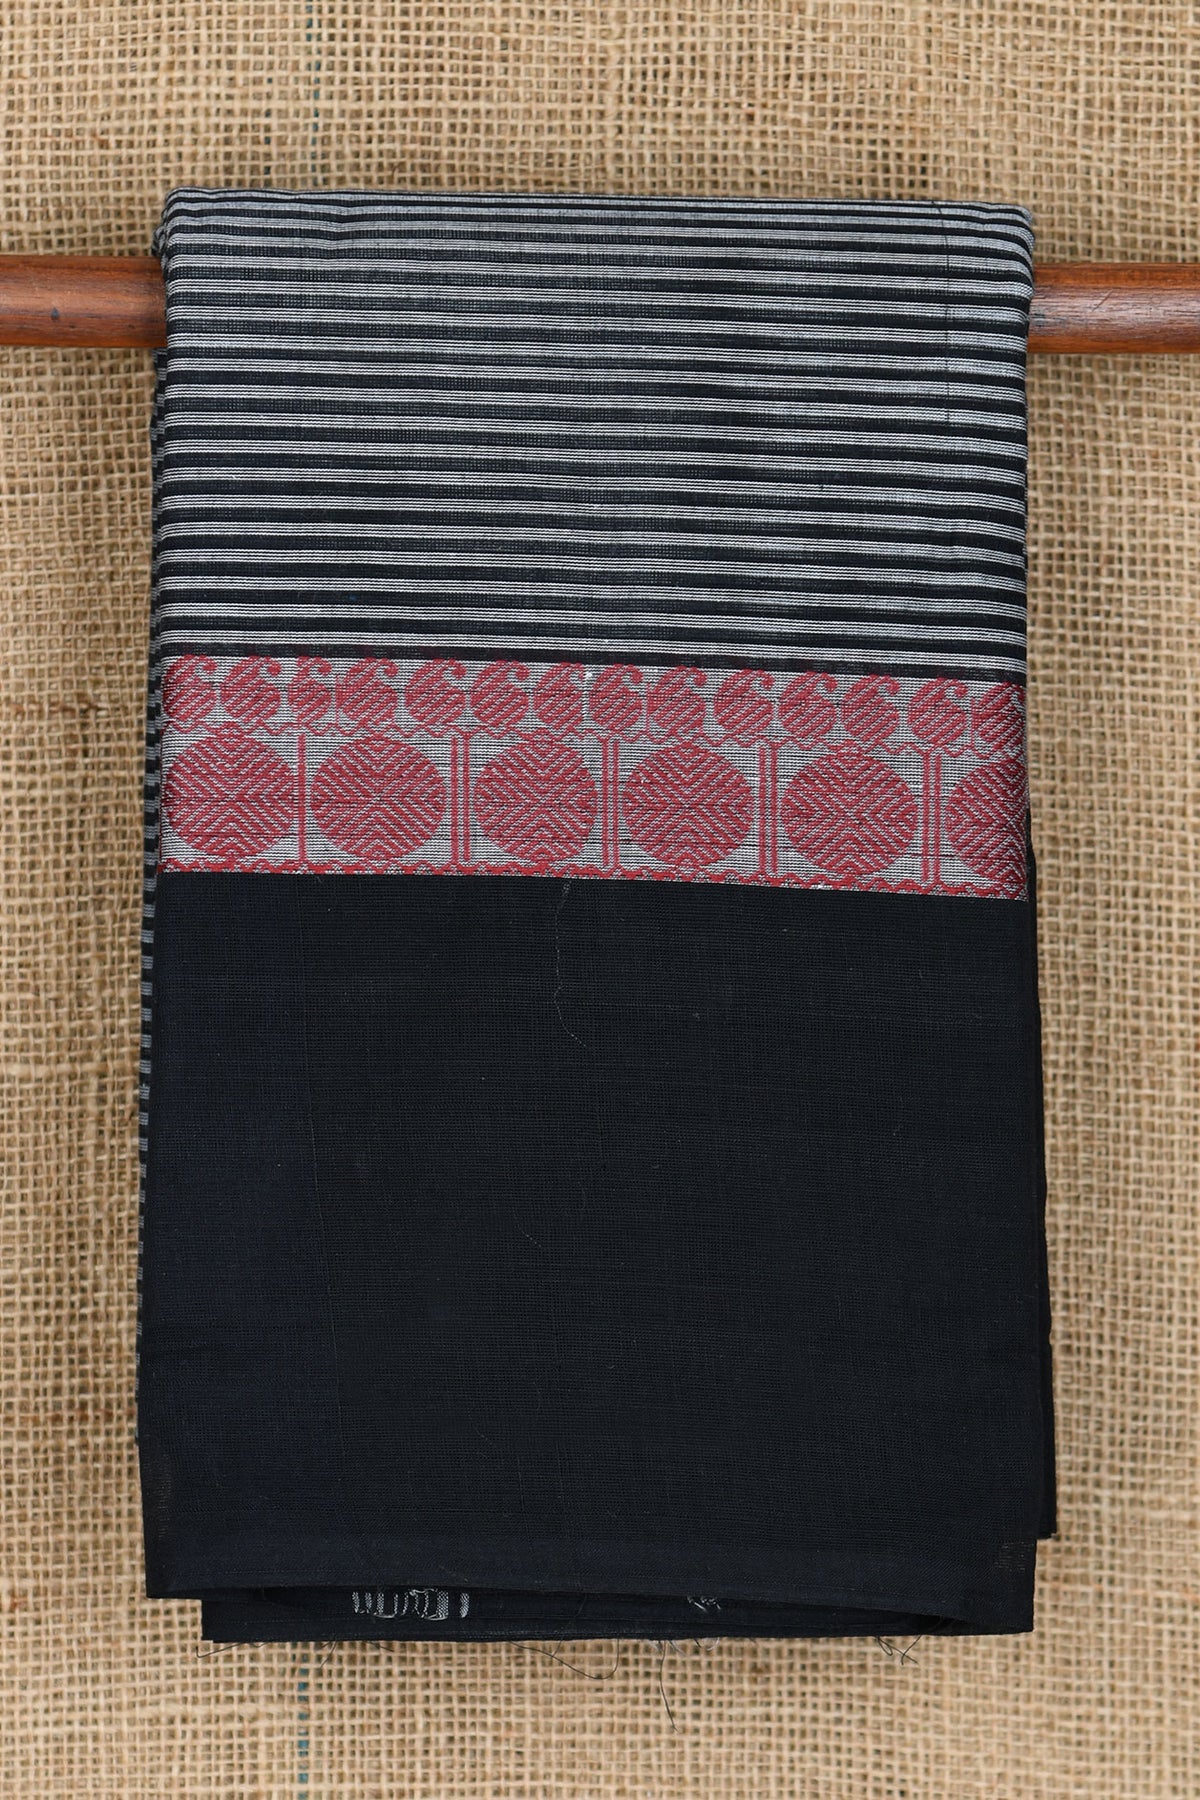 Big Plain And Rudraksh Border In Stripes White And Black Chettinad Cotton Saree